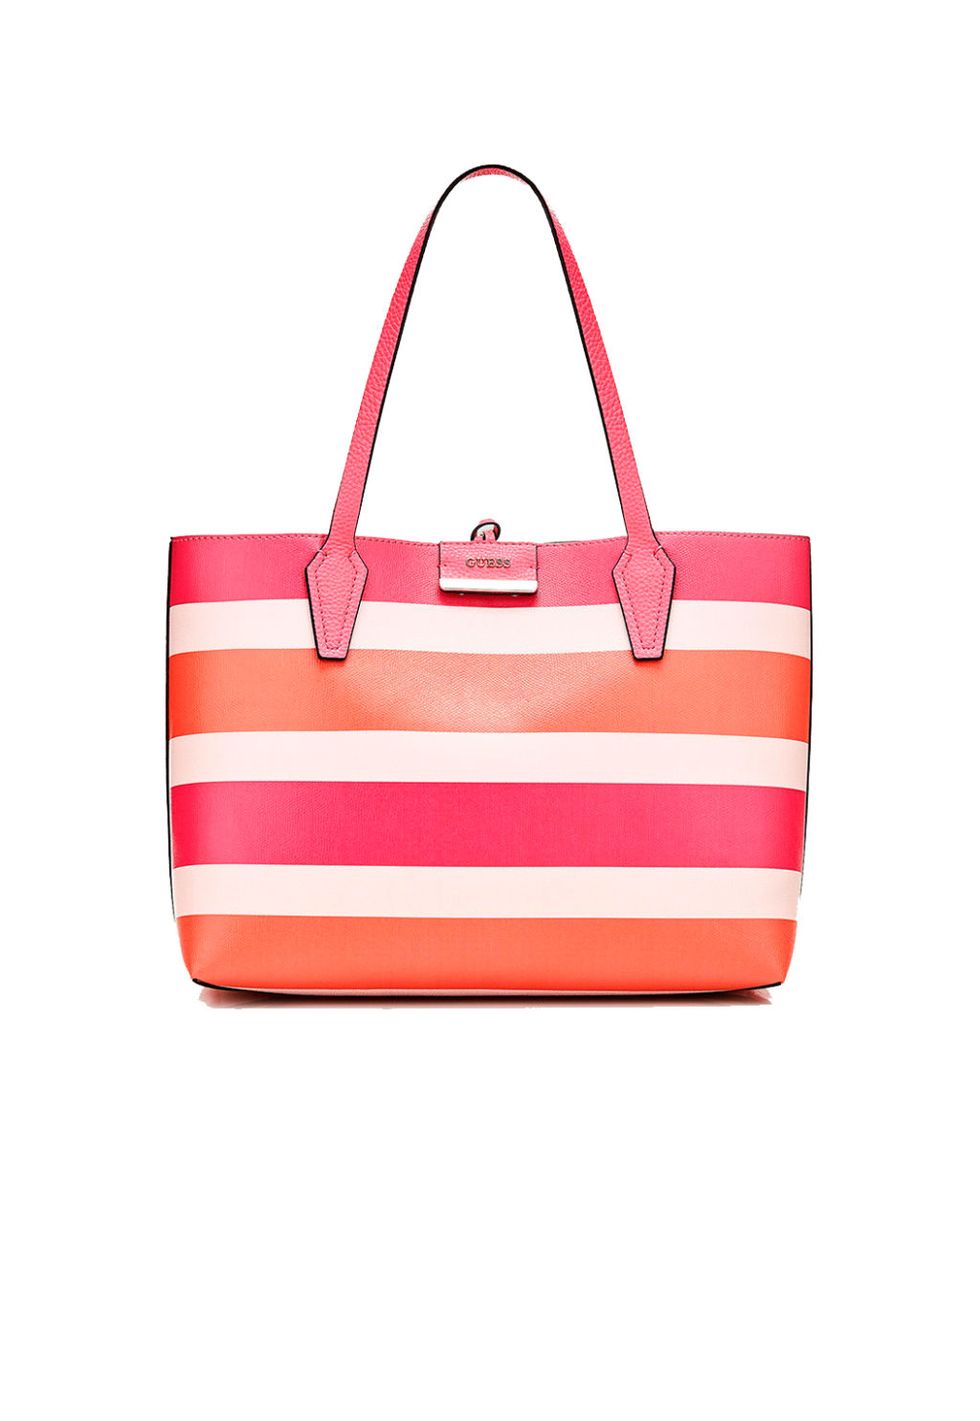 Handbag, Bag, Shoulder bag, Pink, Fashion accessory, Luggage and bags, Tote bag, Material property, Hand luggage, Magenta, 